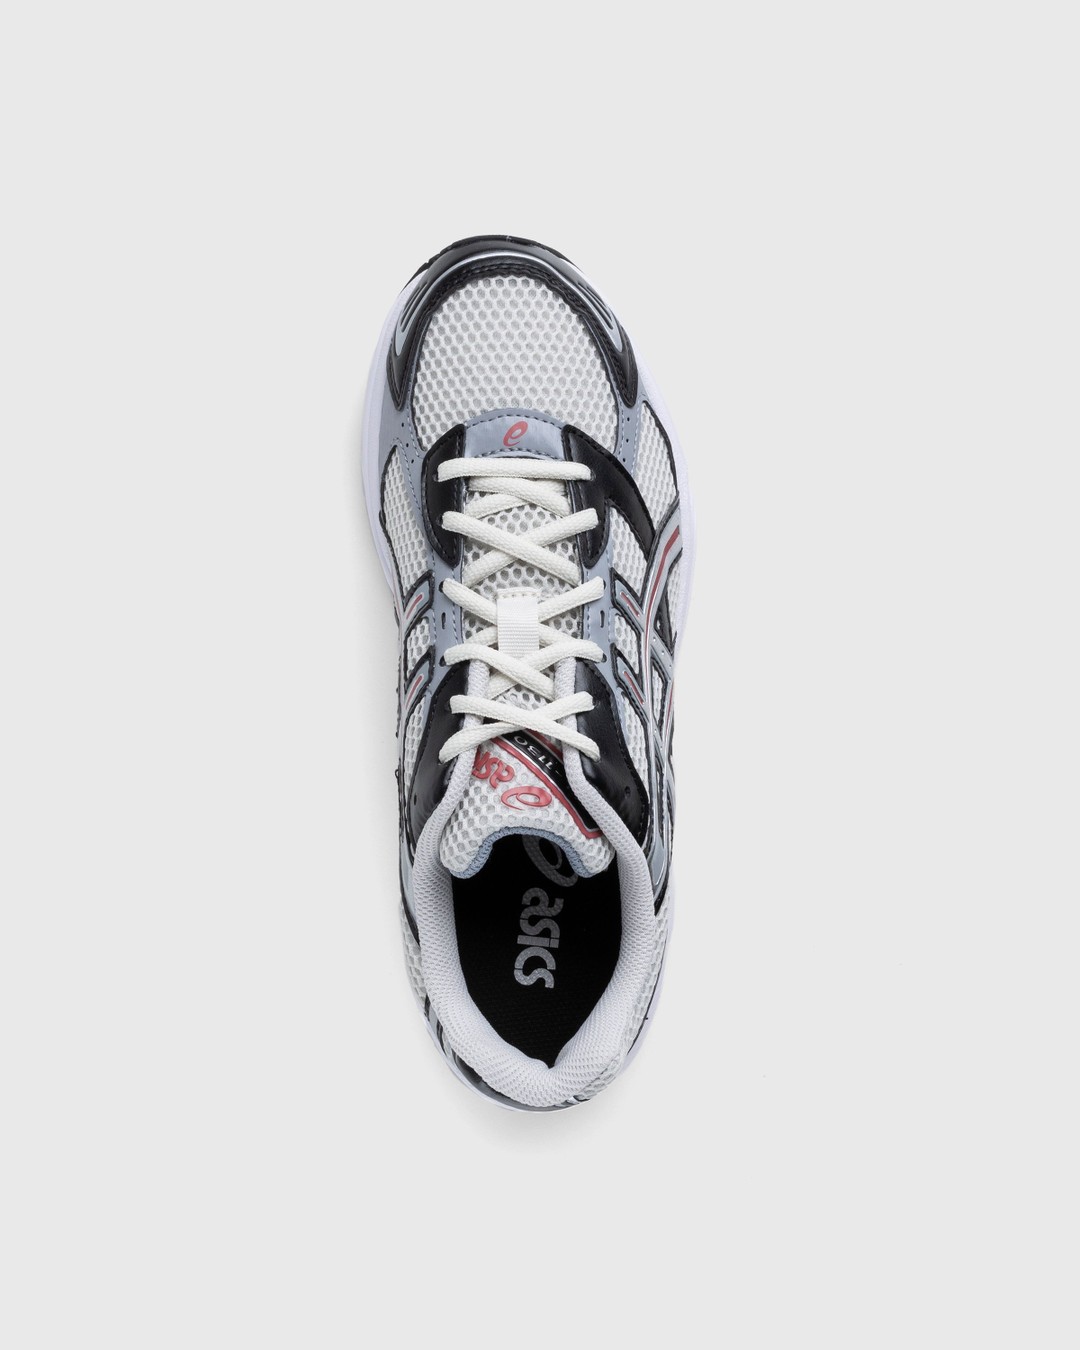 asics – Gel-1130 Smoke Grey Pure Silver - Low Top Sneakers - Multi - Image 5